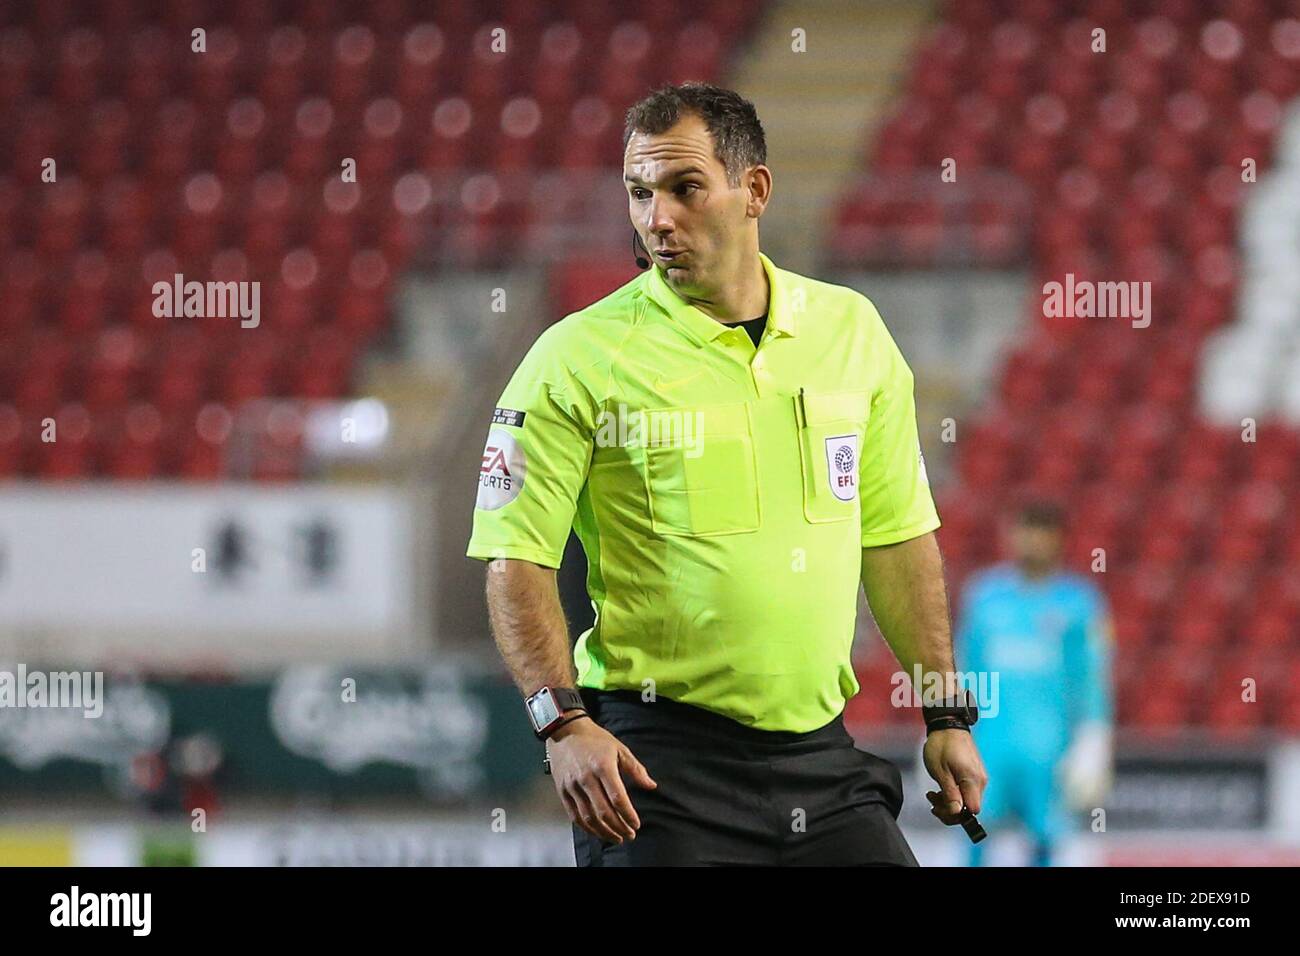 Elegance problem dårligt referee Tim Robinson during the game Stock Photo - Alamy